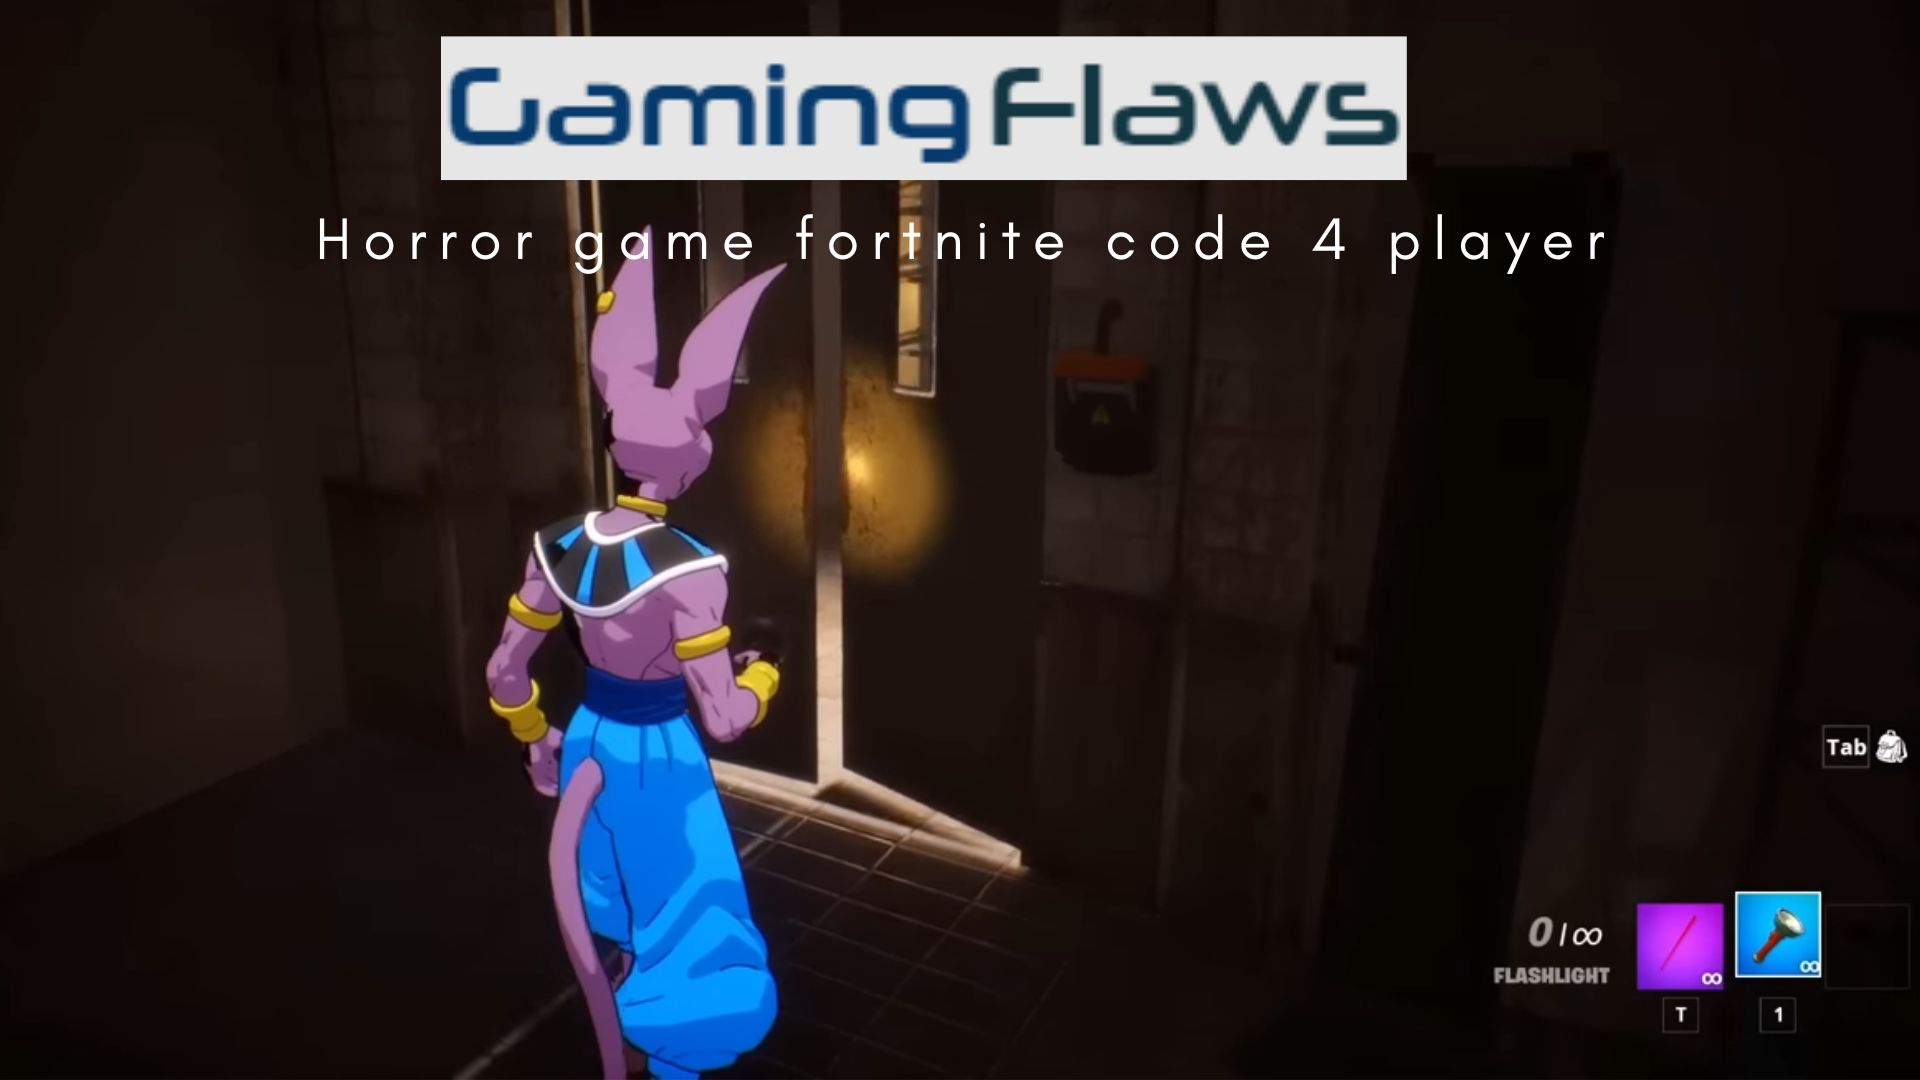 Horror game fortnite code 4 player